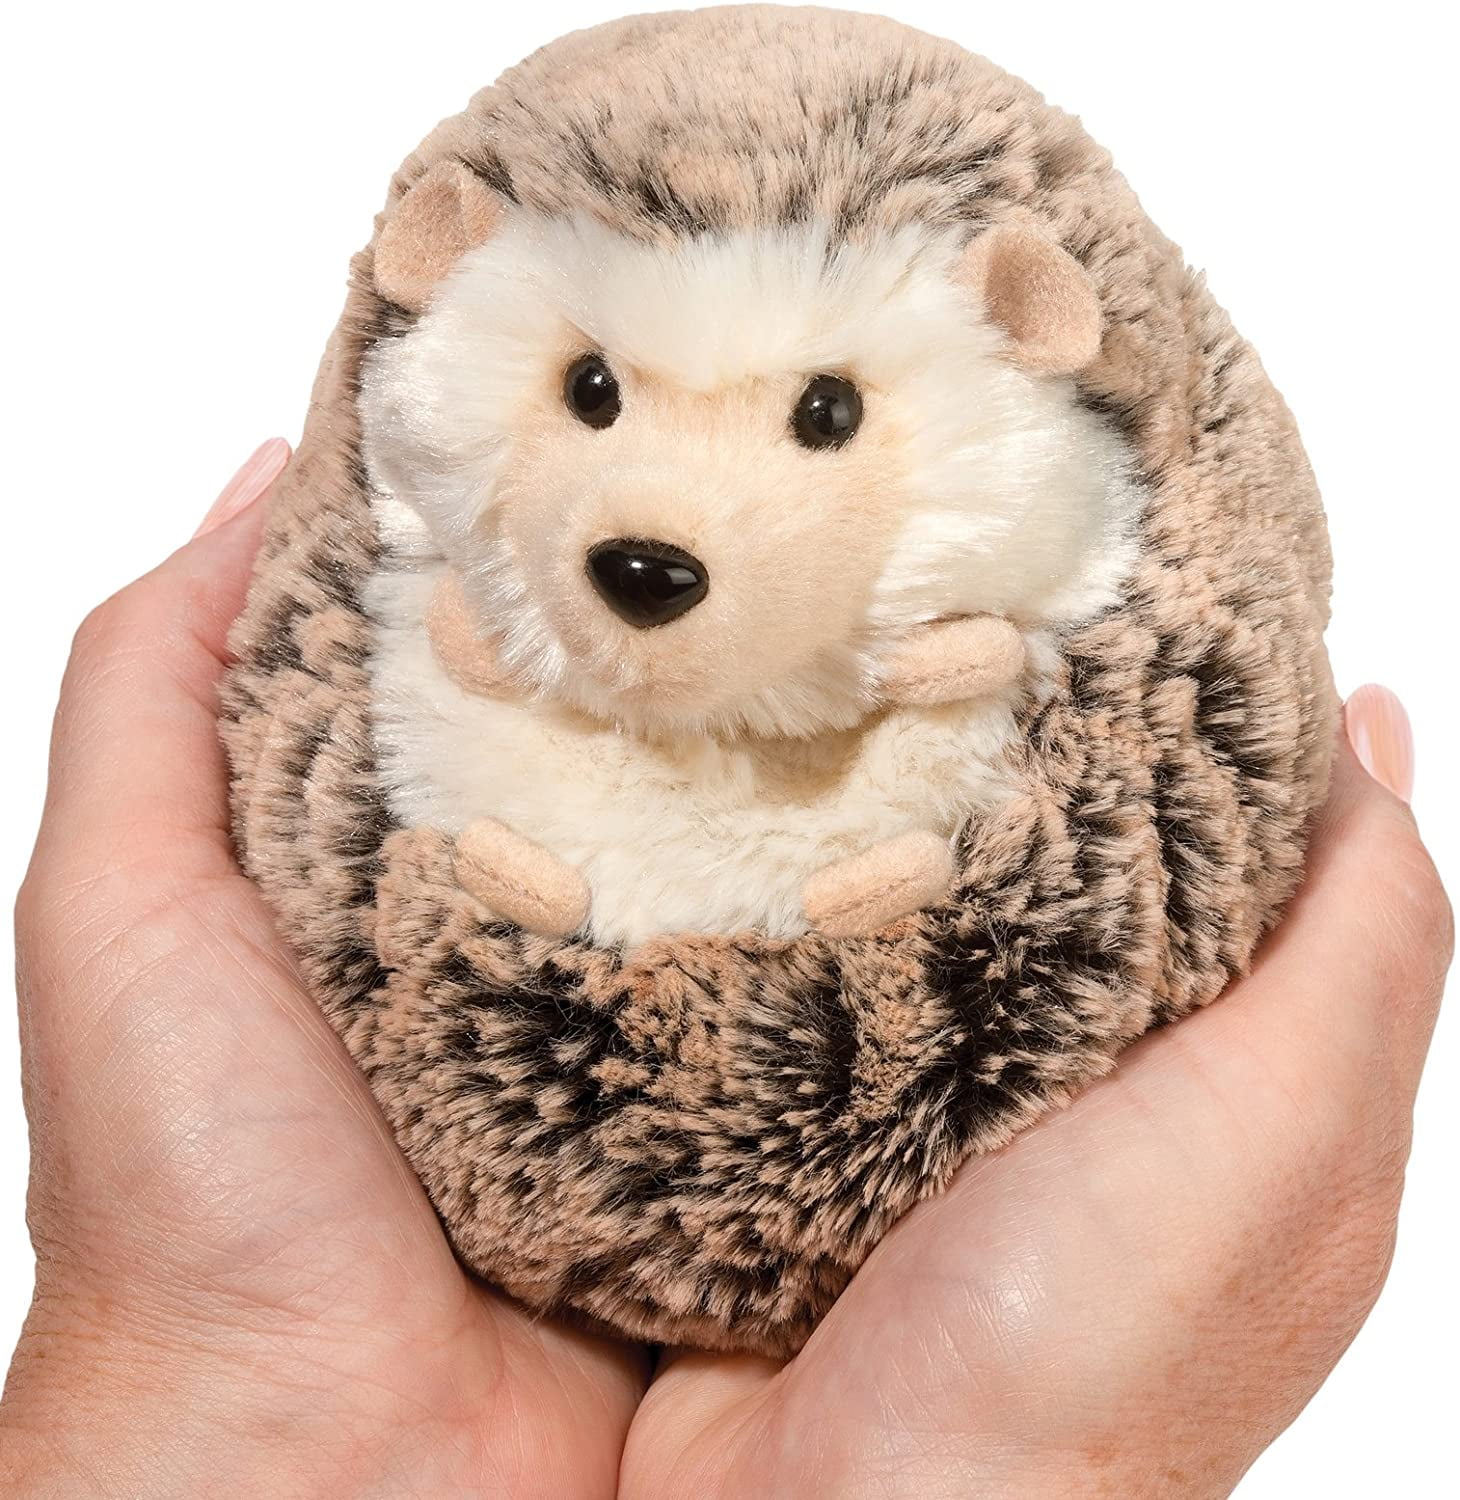 SPICY the Plush HEDGEHOG Stuffed Animal by Douglas Cuddle Toys #4120 